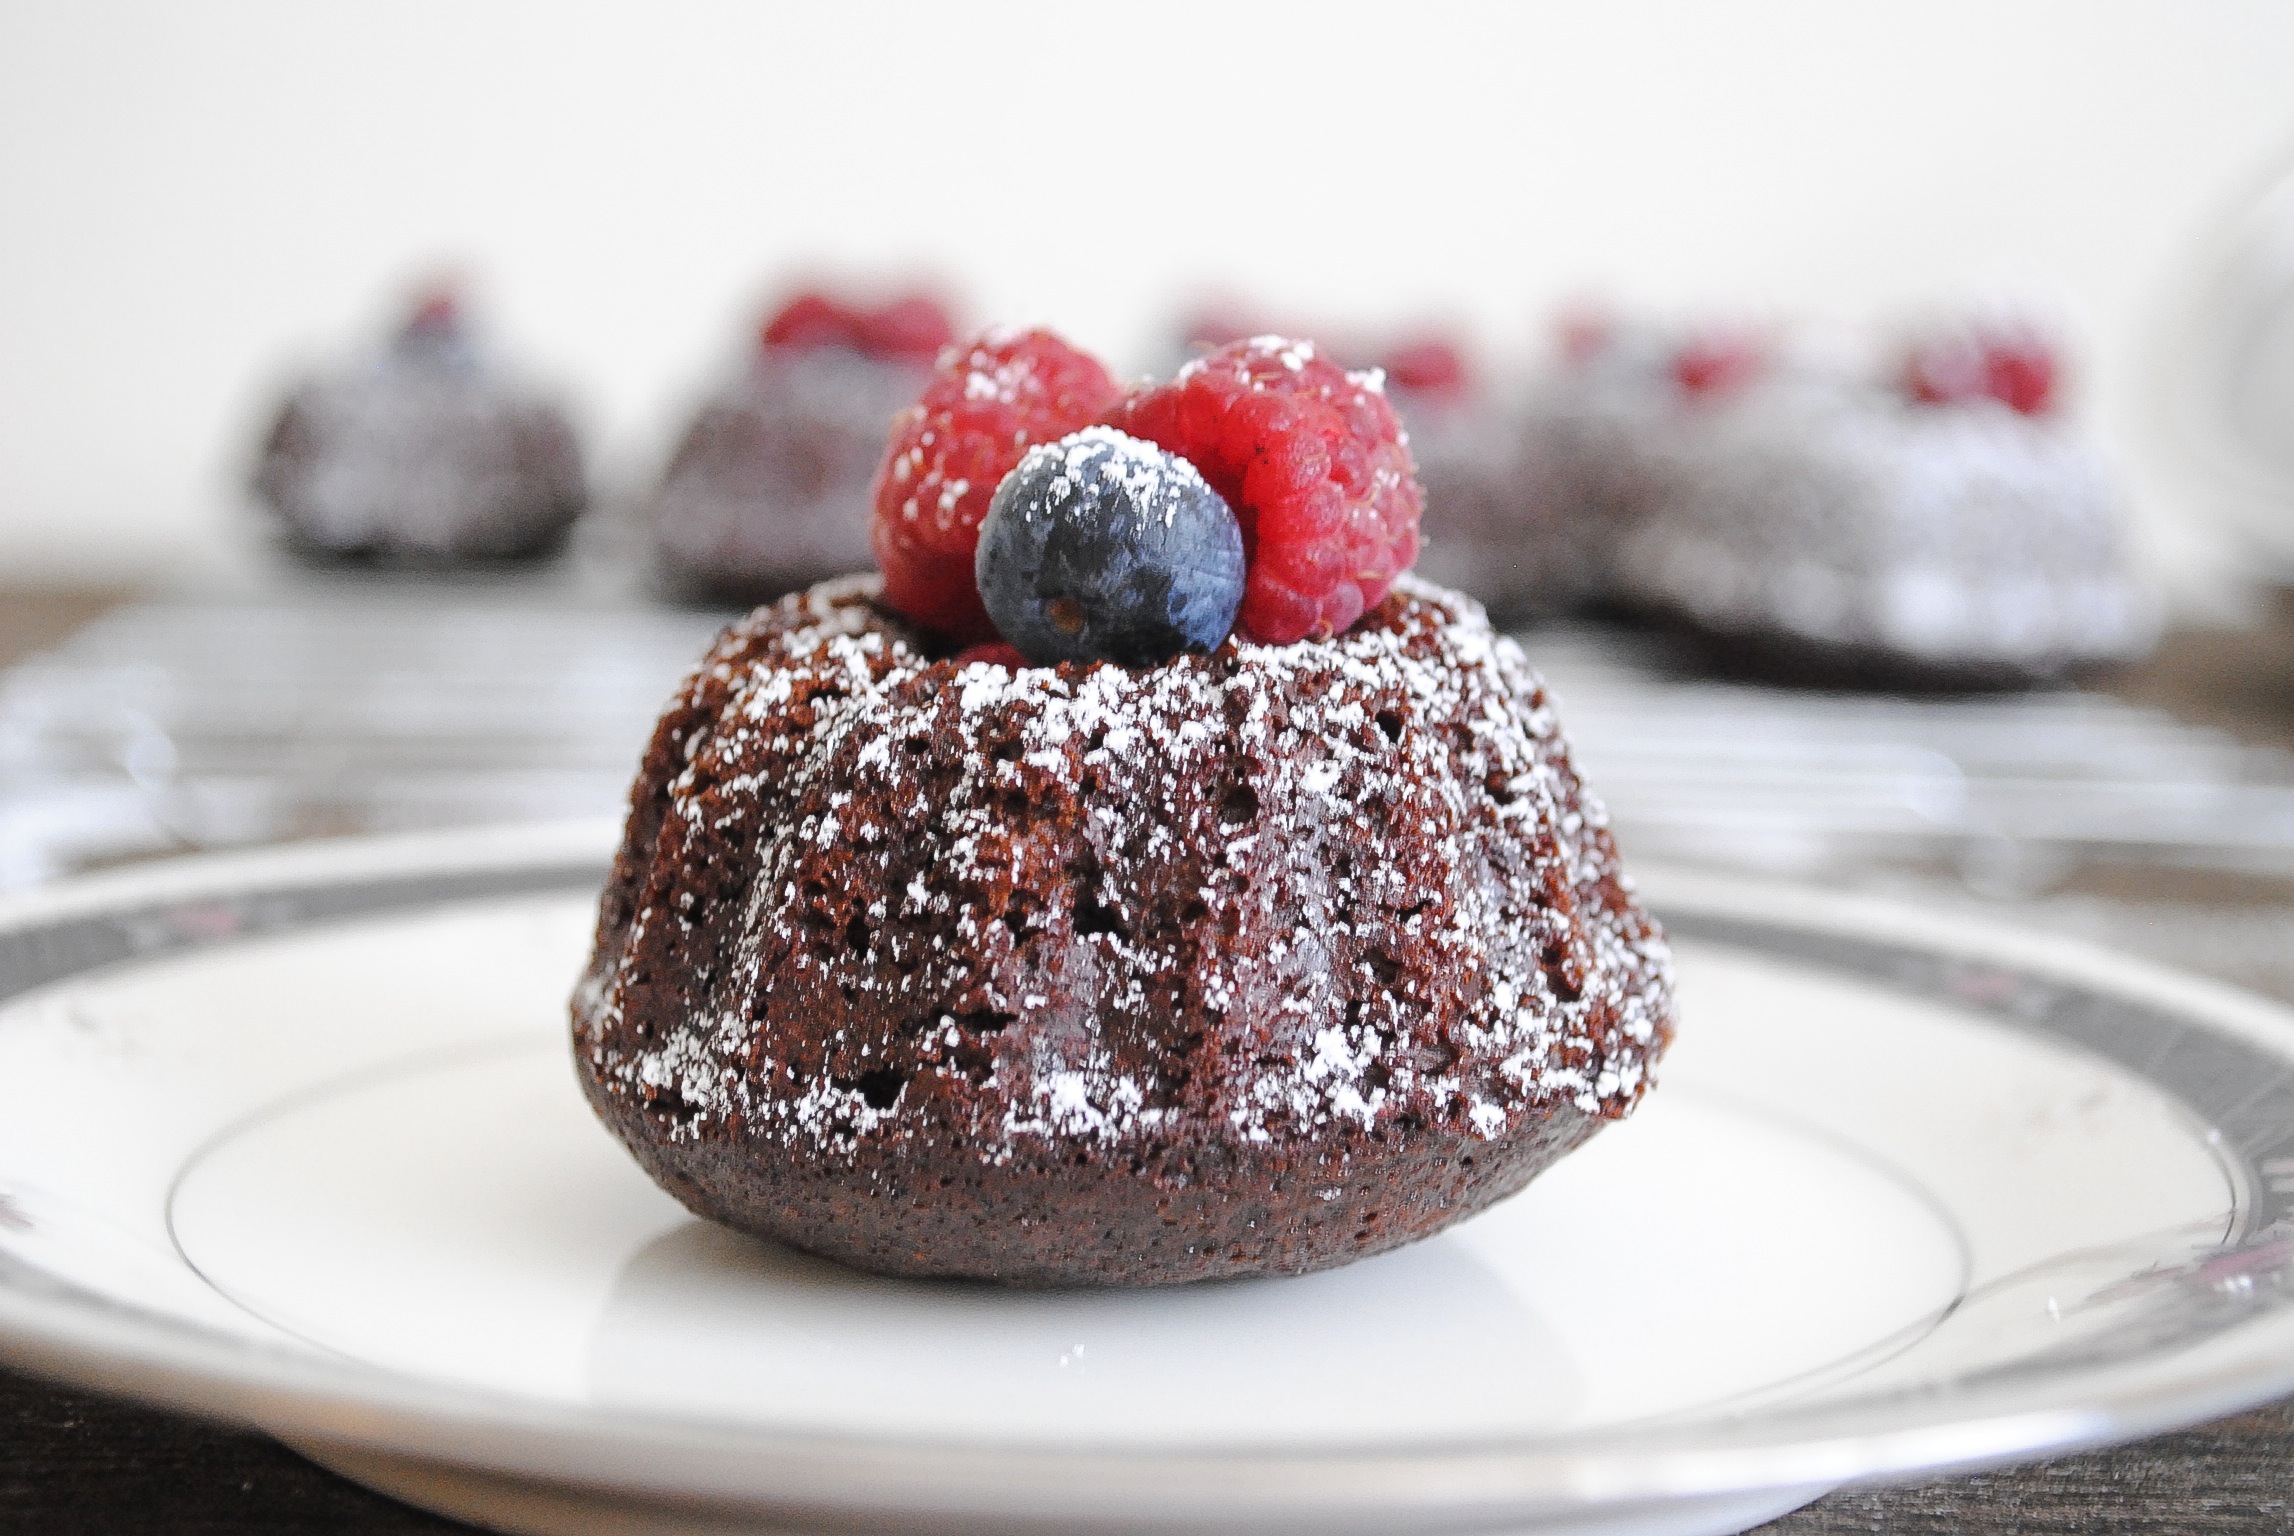 Triple Chocolate Mini Bundt Cakes Recipe - Dash of Grace